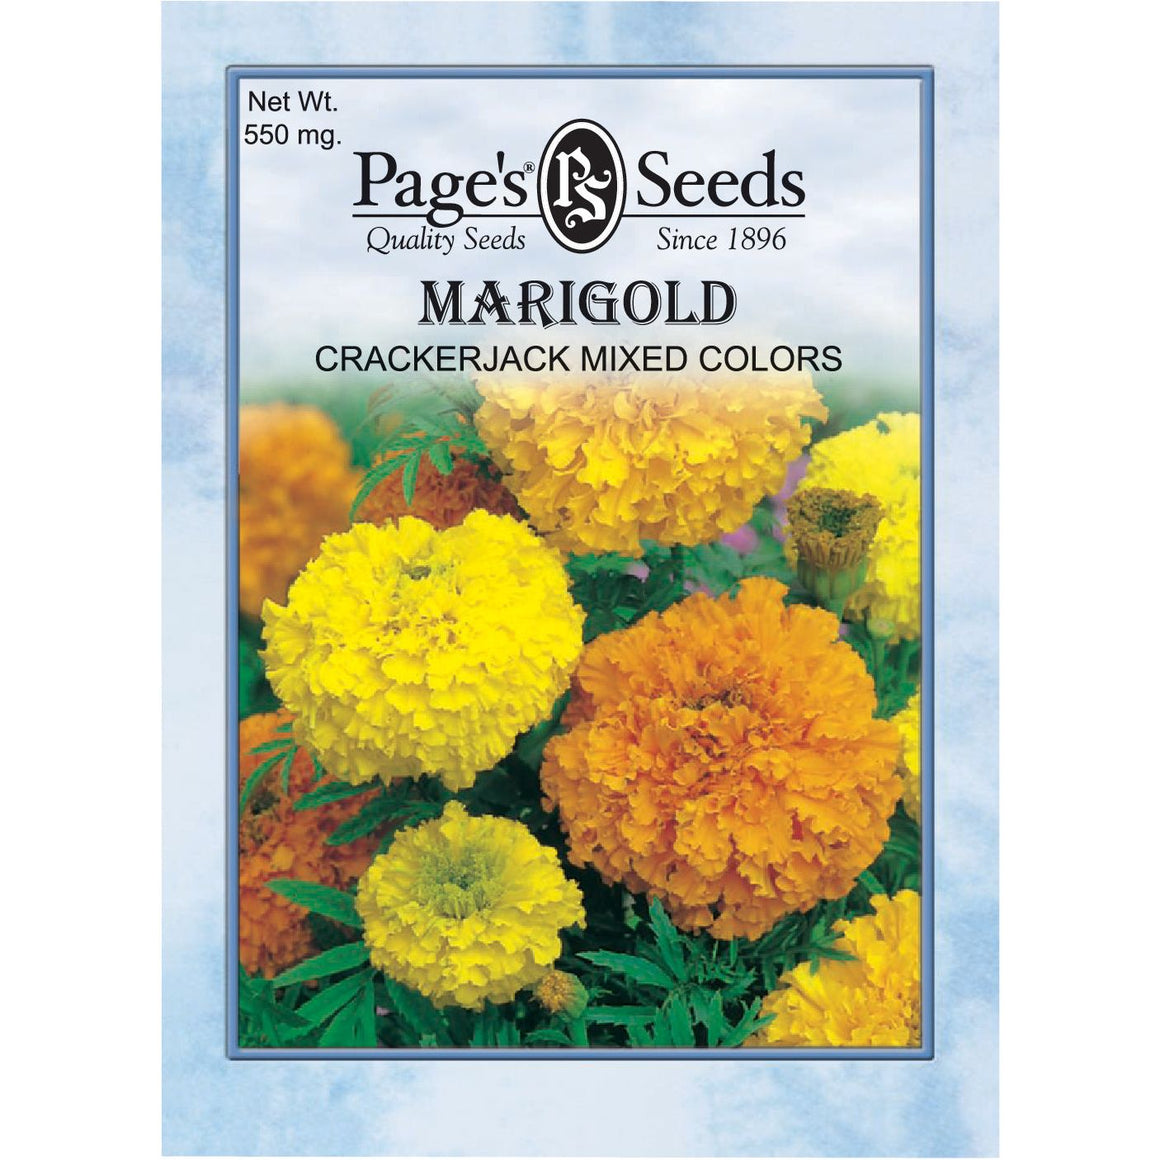 Marigold Crackerjack Mixed Colors Seed - 1 Packet - Seed World